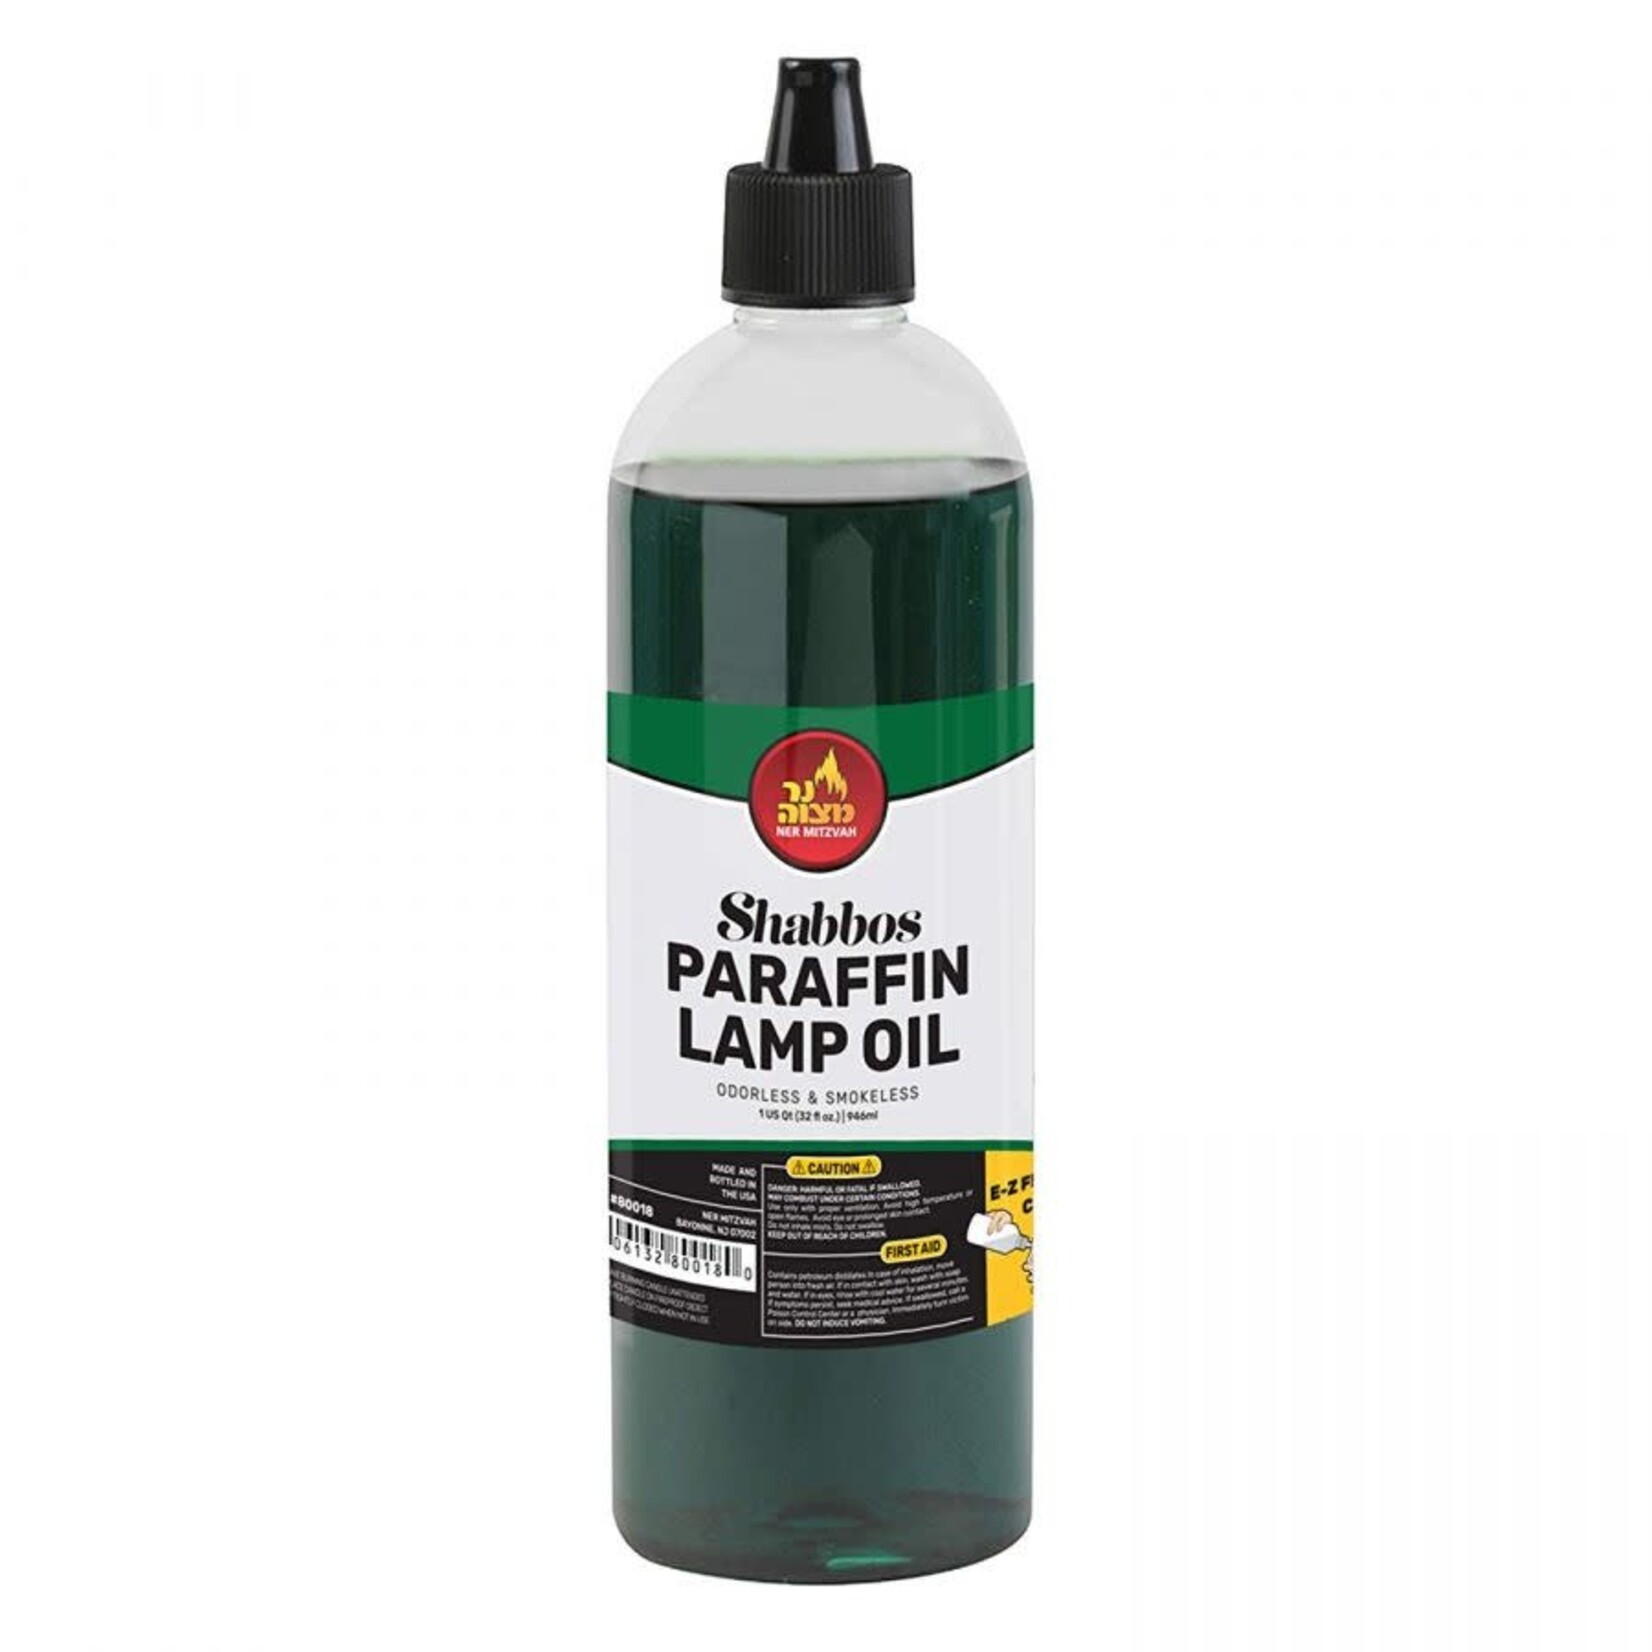 32oz Smokeless Paraffin Lamp Oil, Green